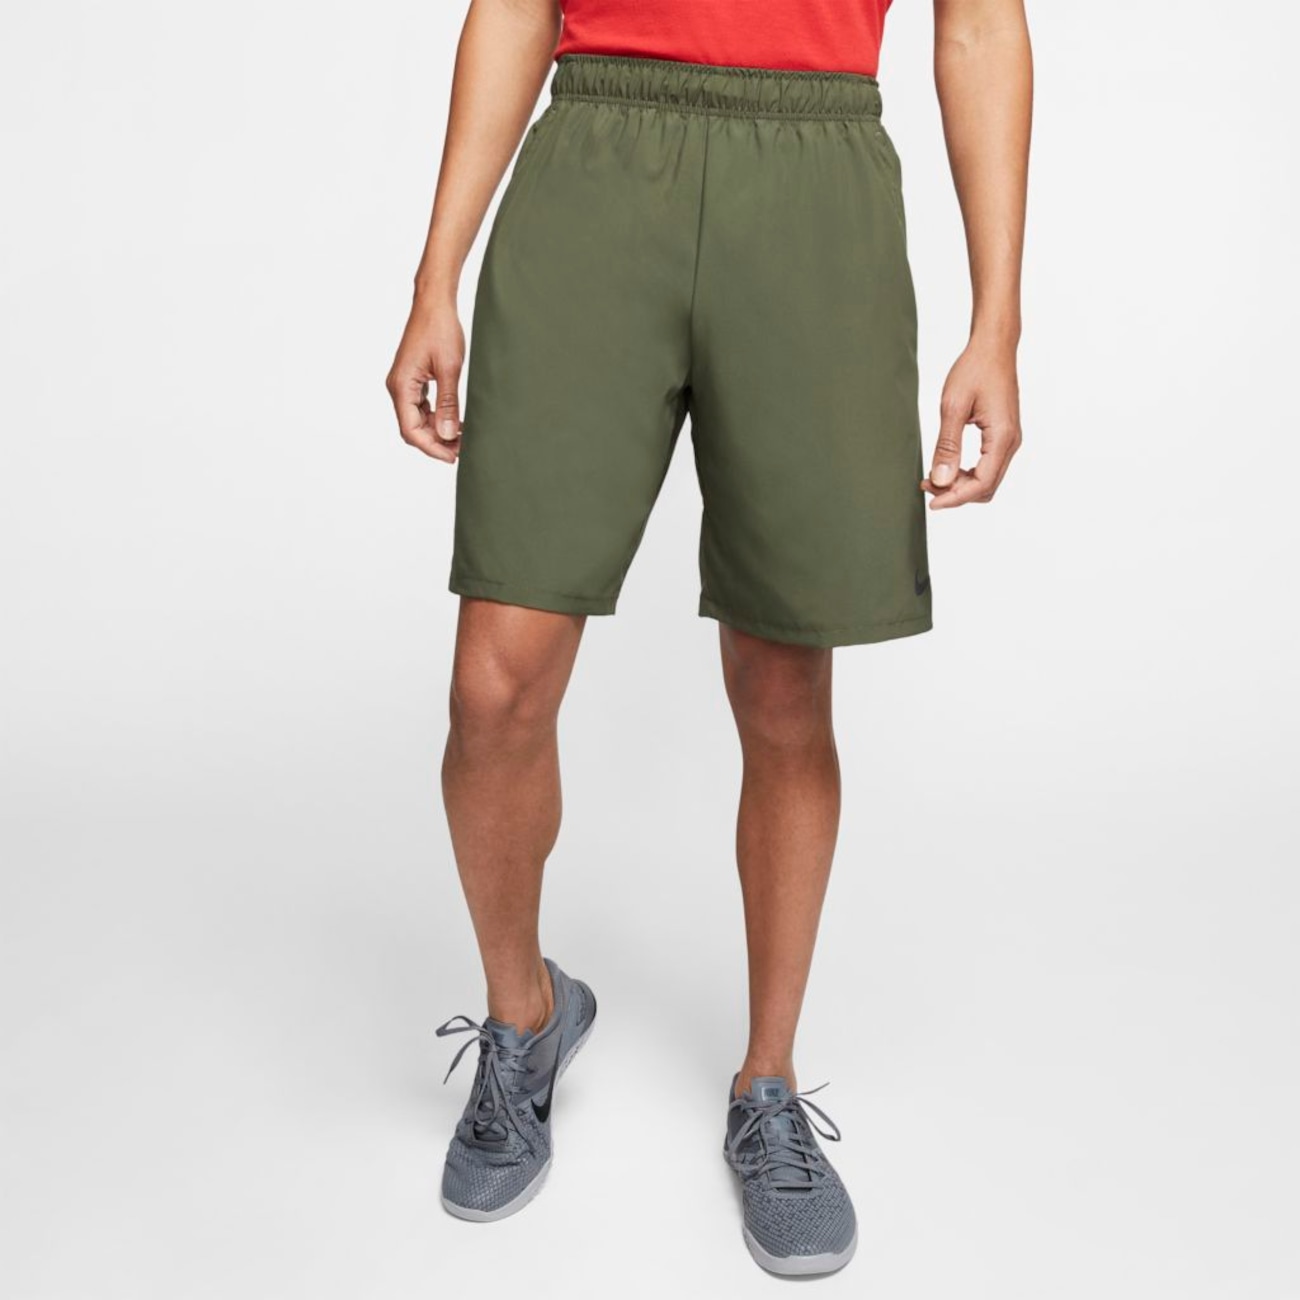 Shorts Nike Flex Woven 2.0 Masculino - Nike